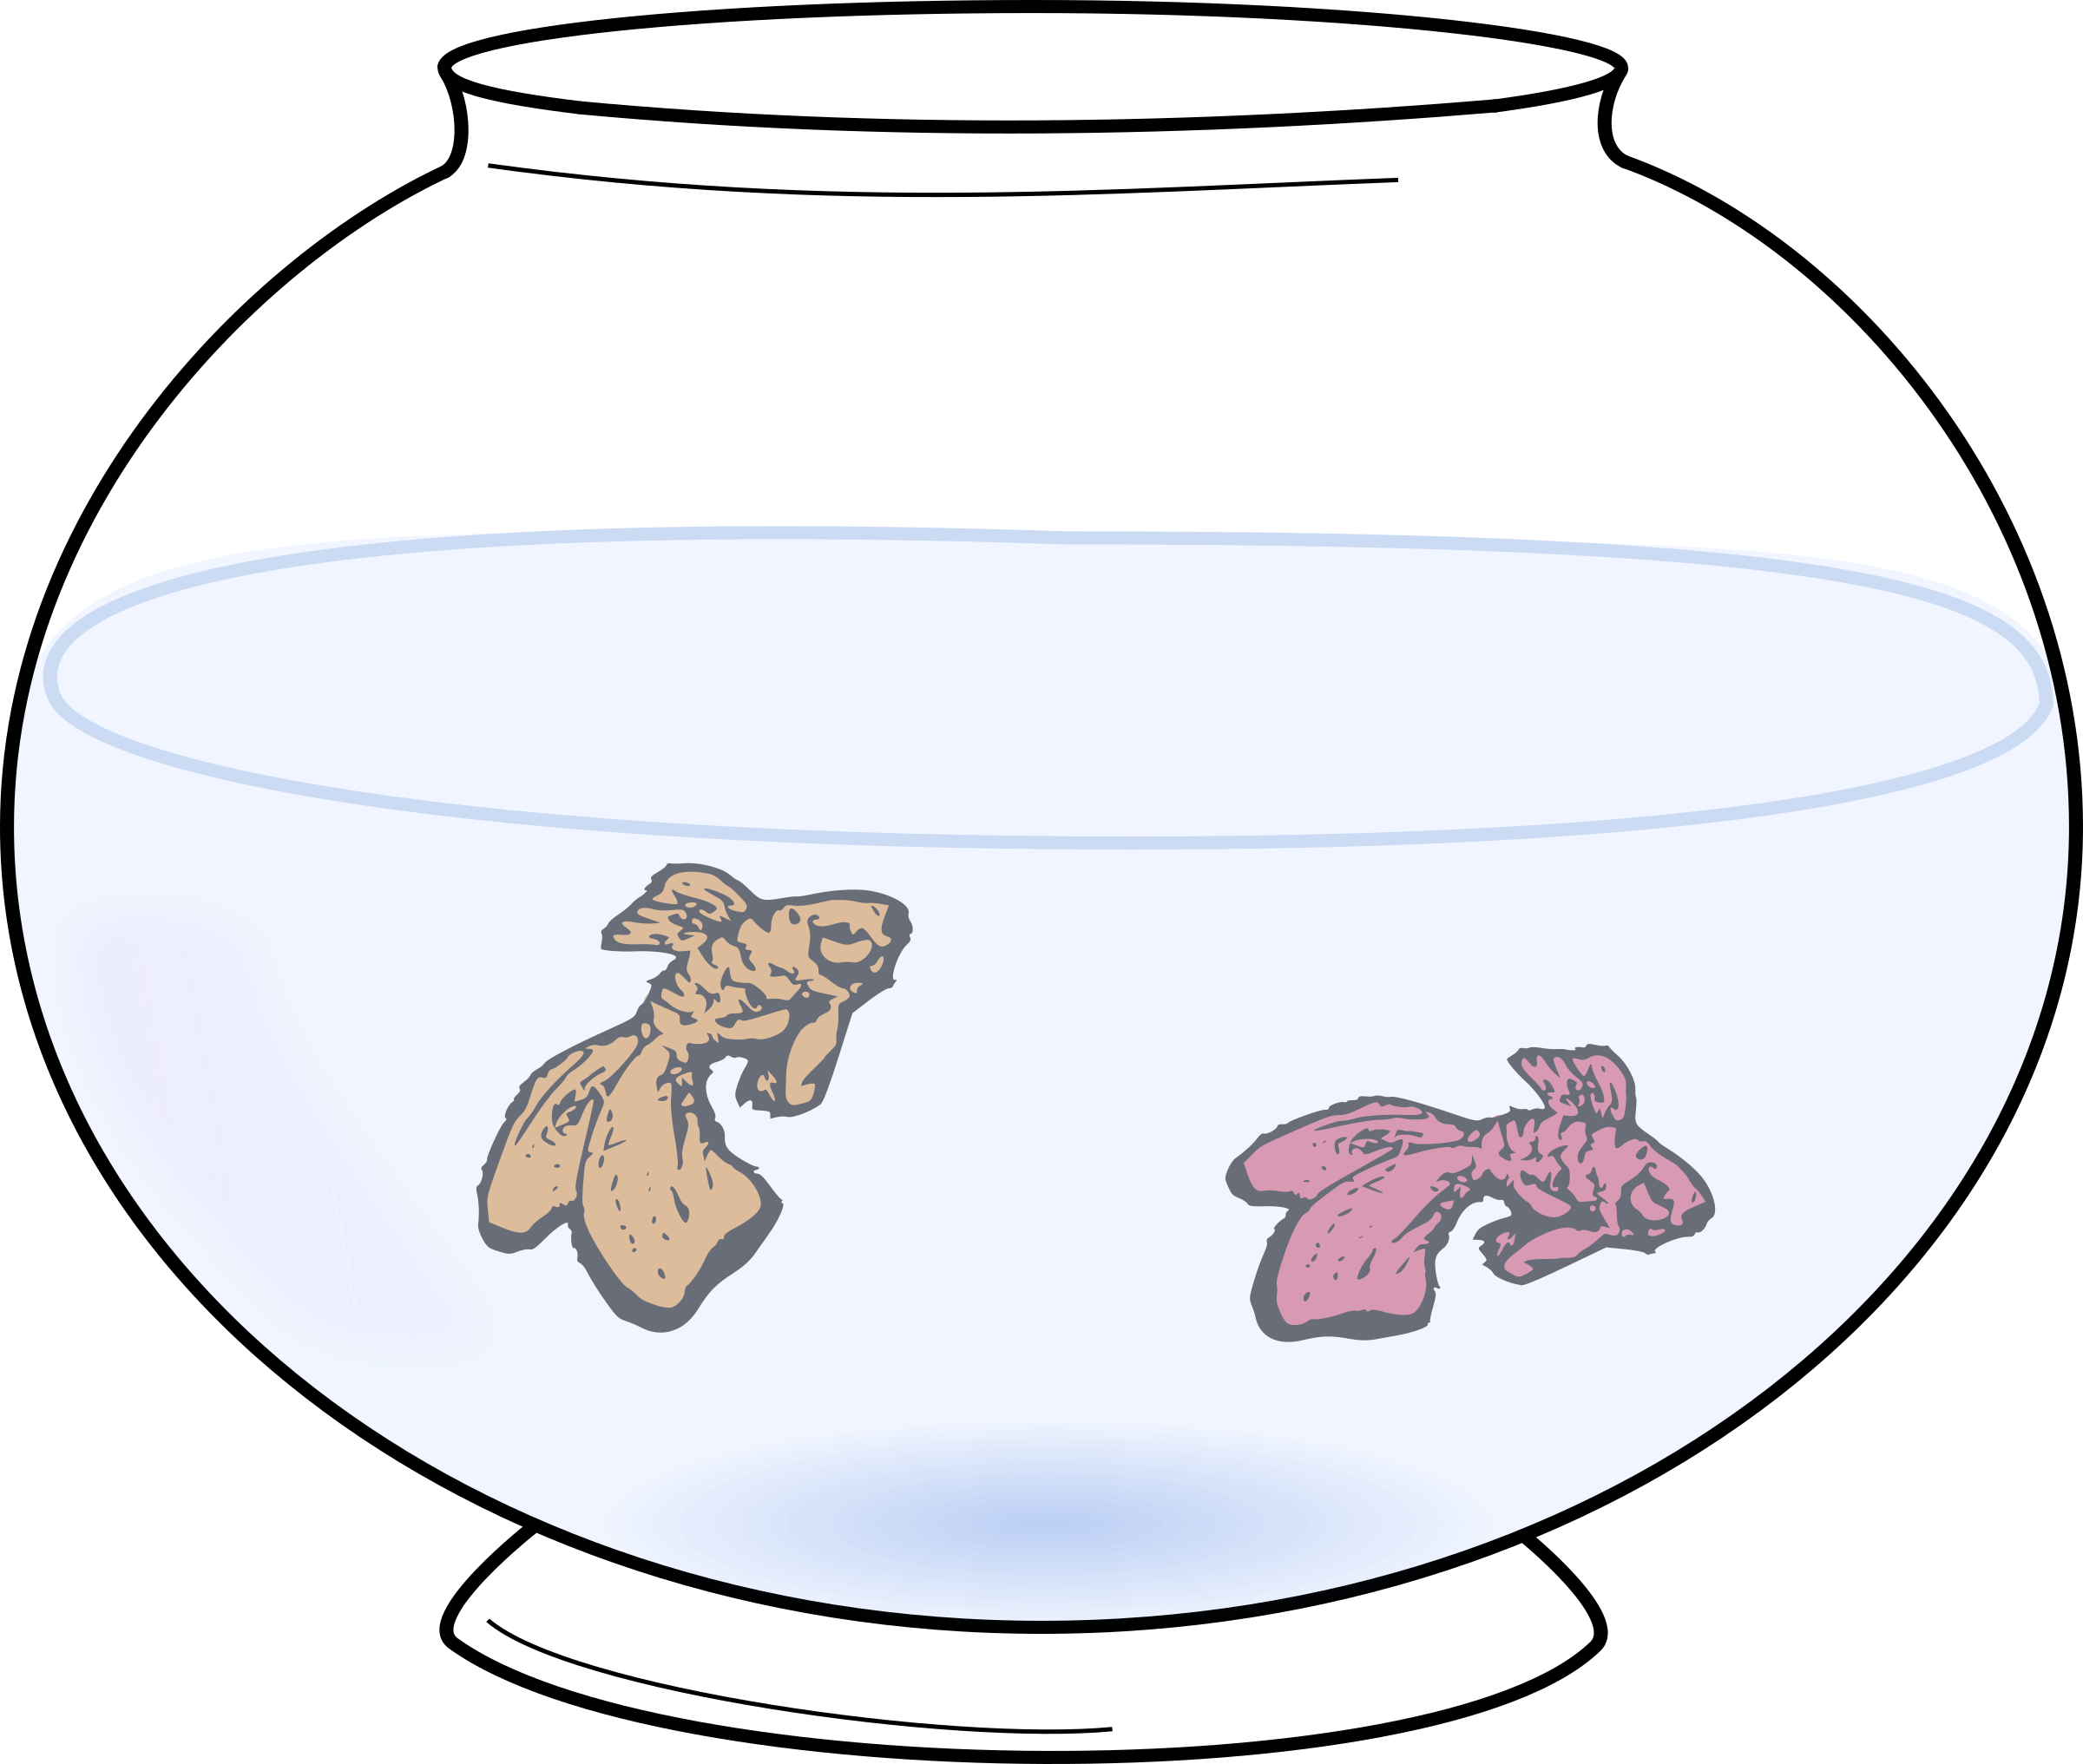 Fish bowl with big. Fishbowl clipart cartoon